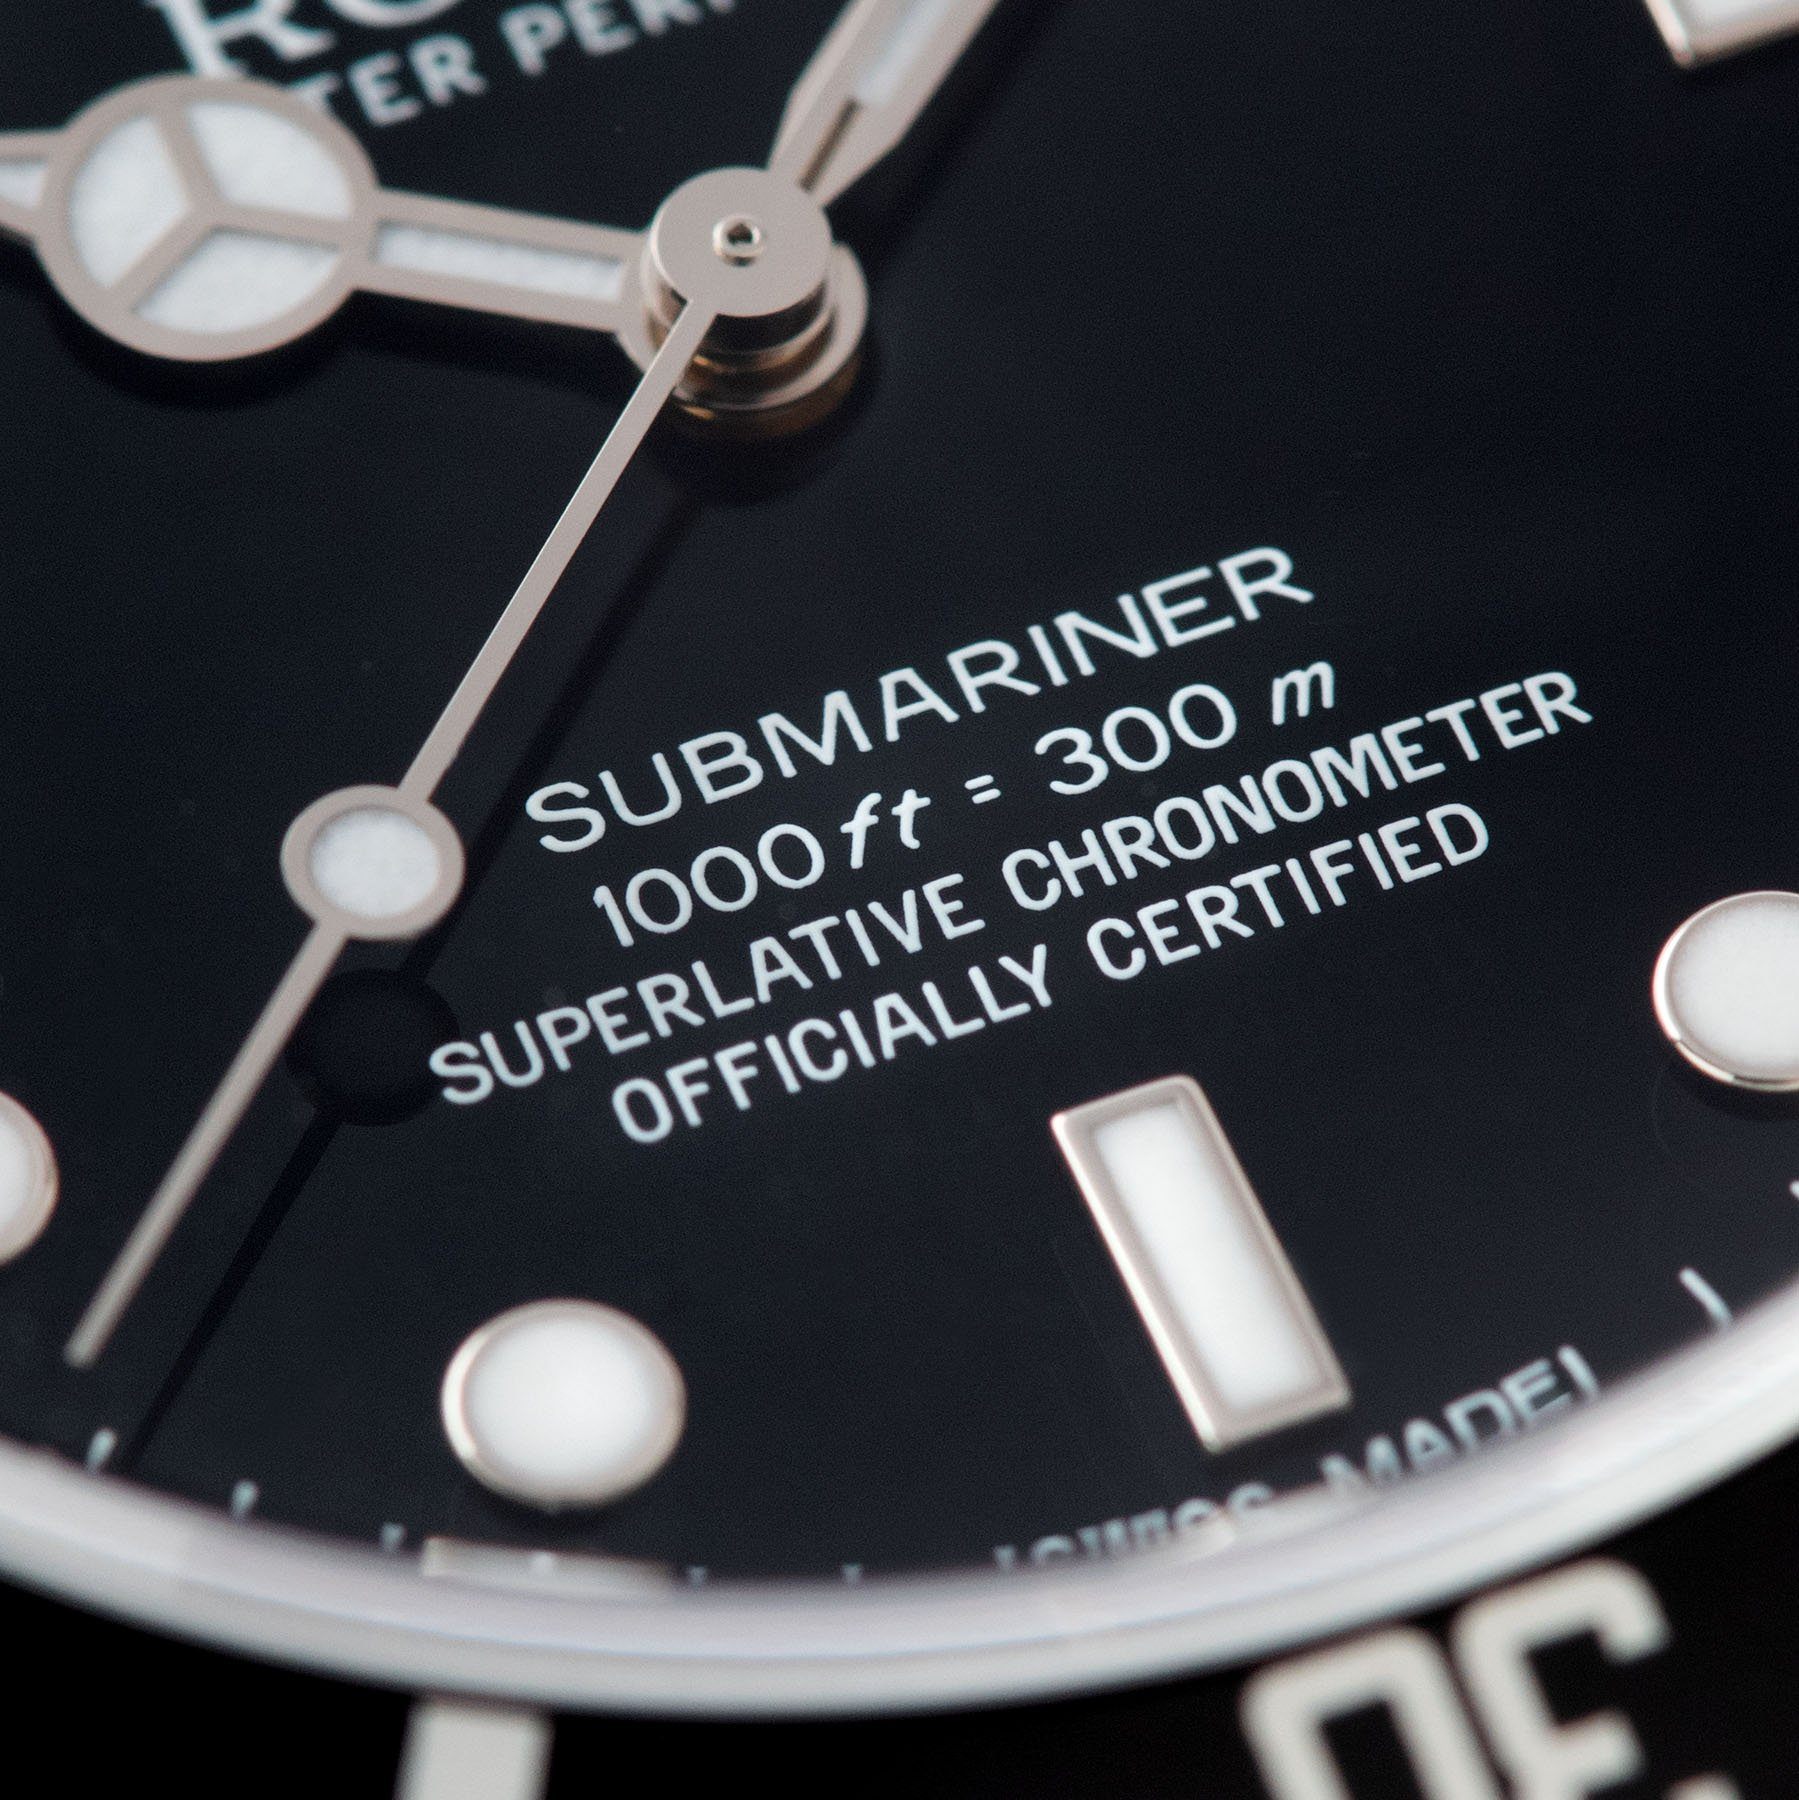 Rolex Submariner Four-Line Dial 14060M Full Set 4 liner details